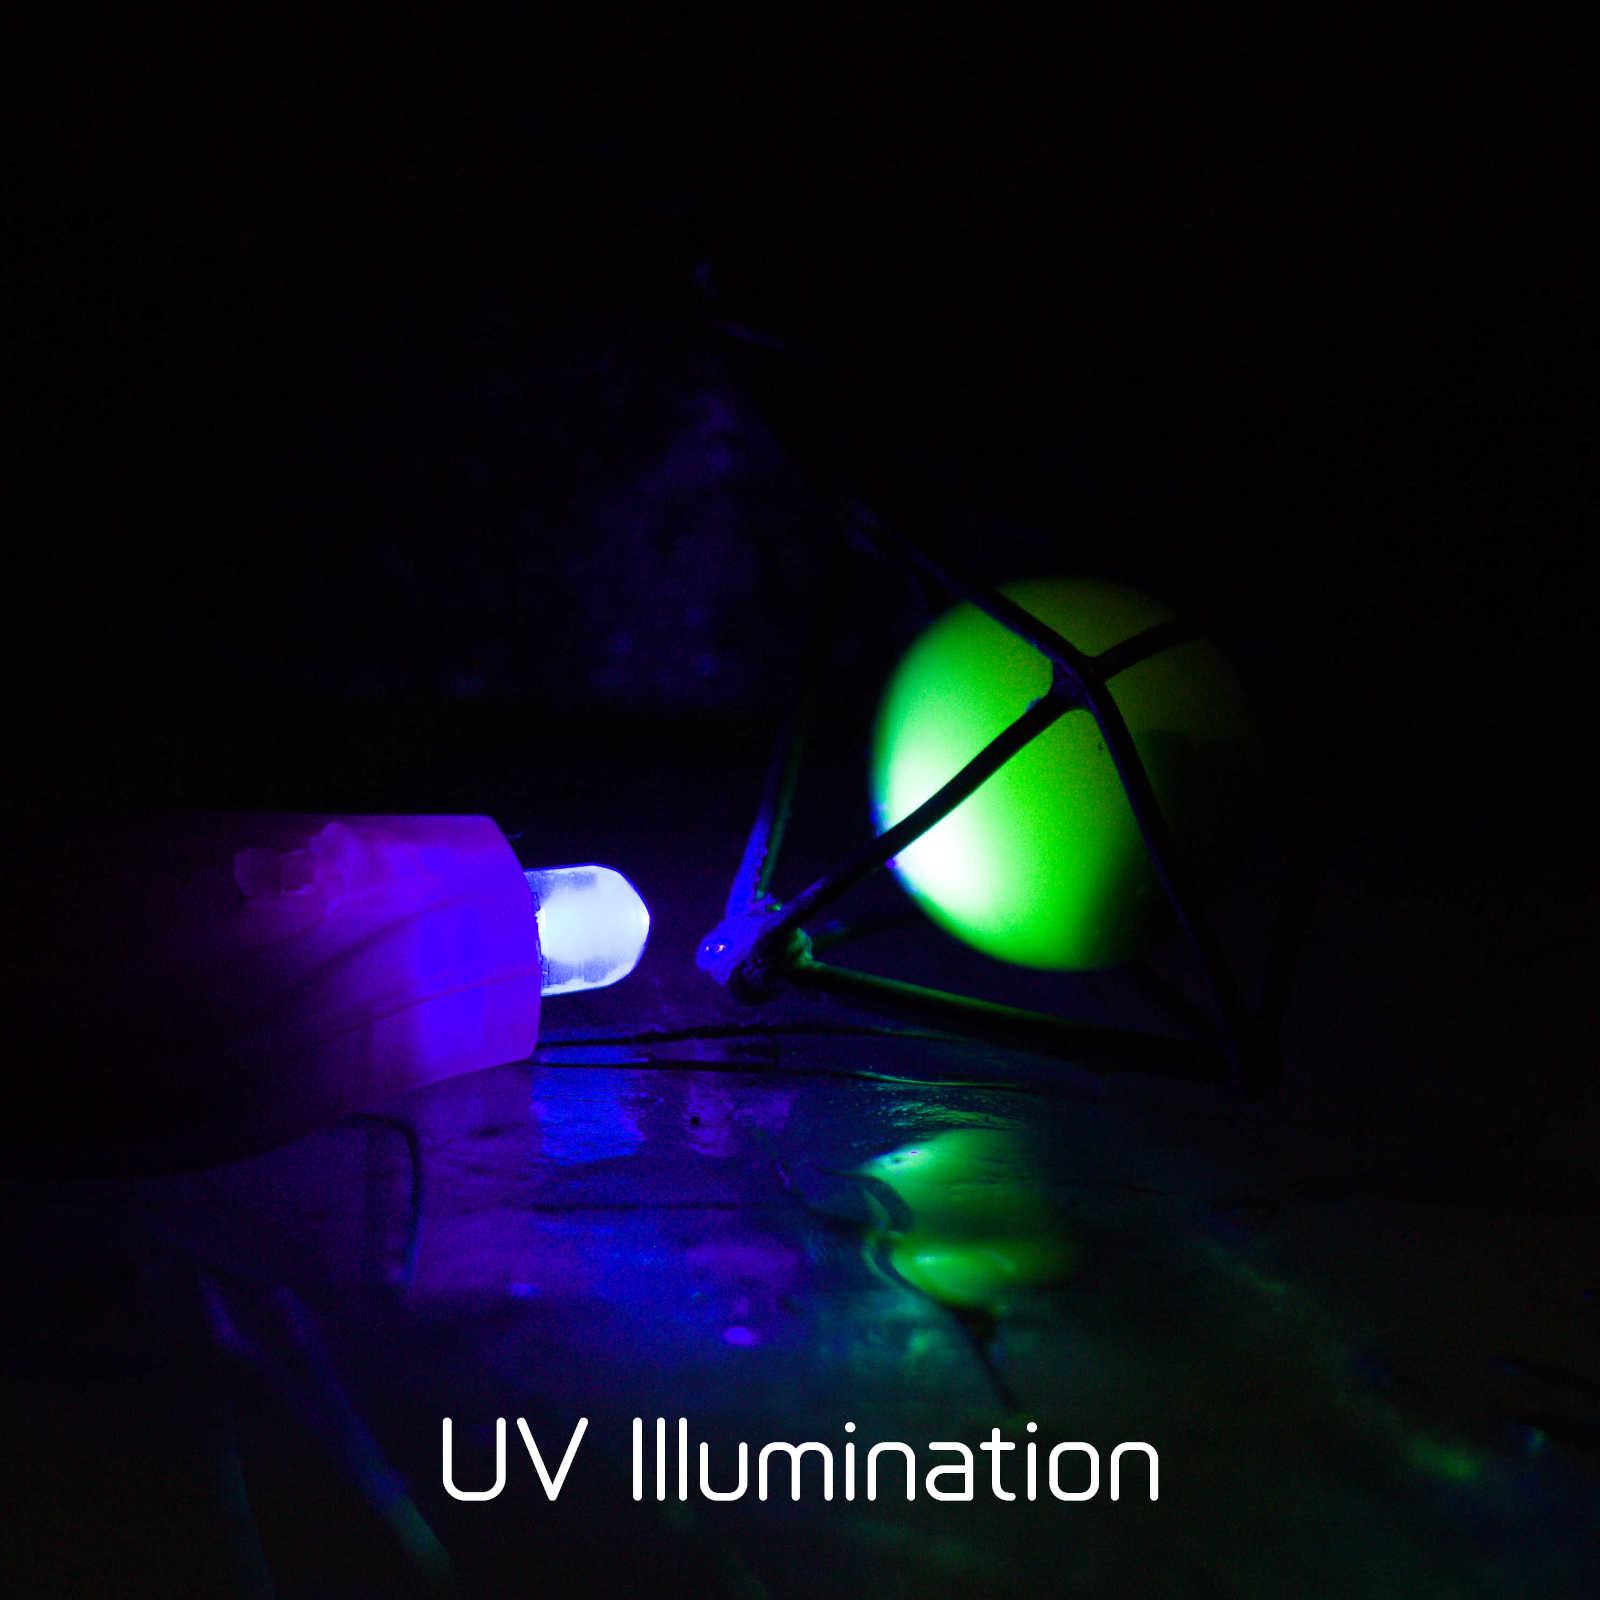 captured Uranium glass marble under UV light